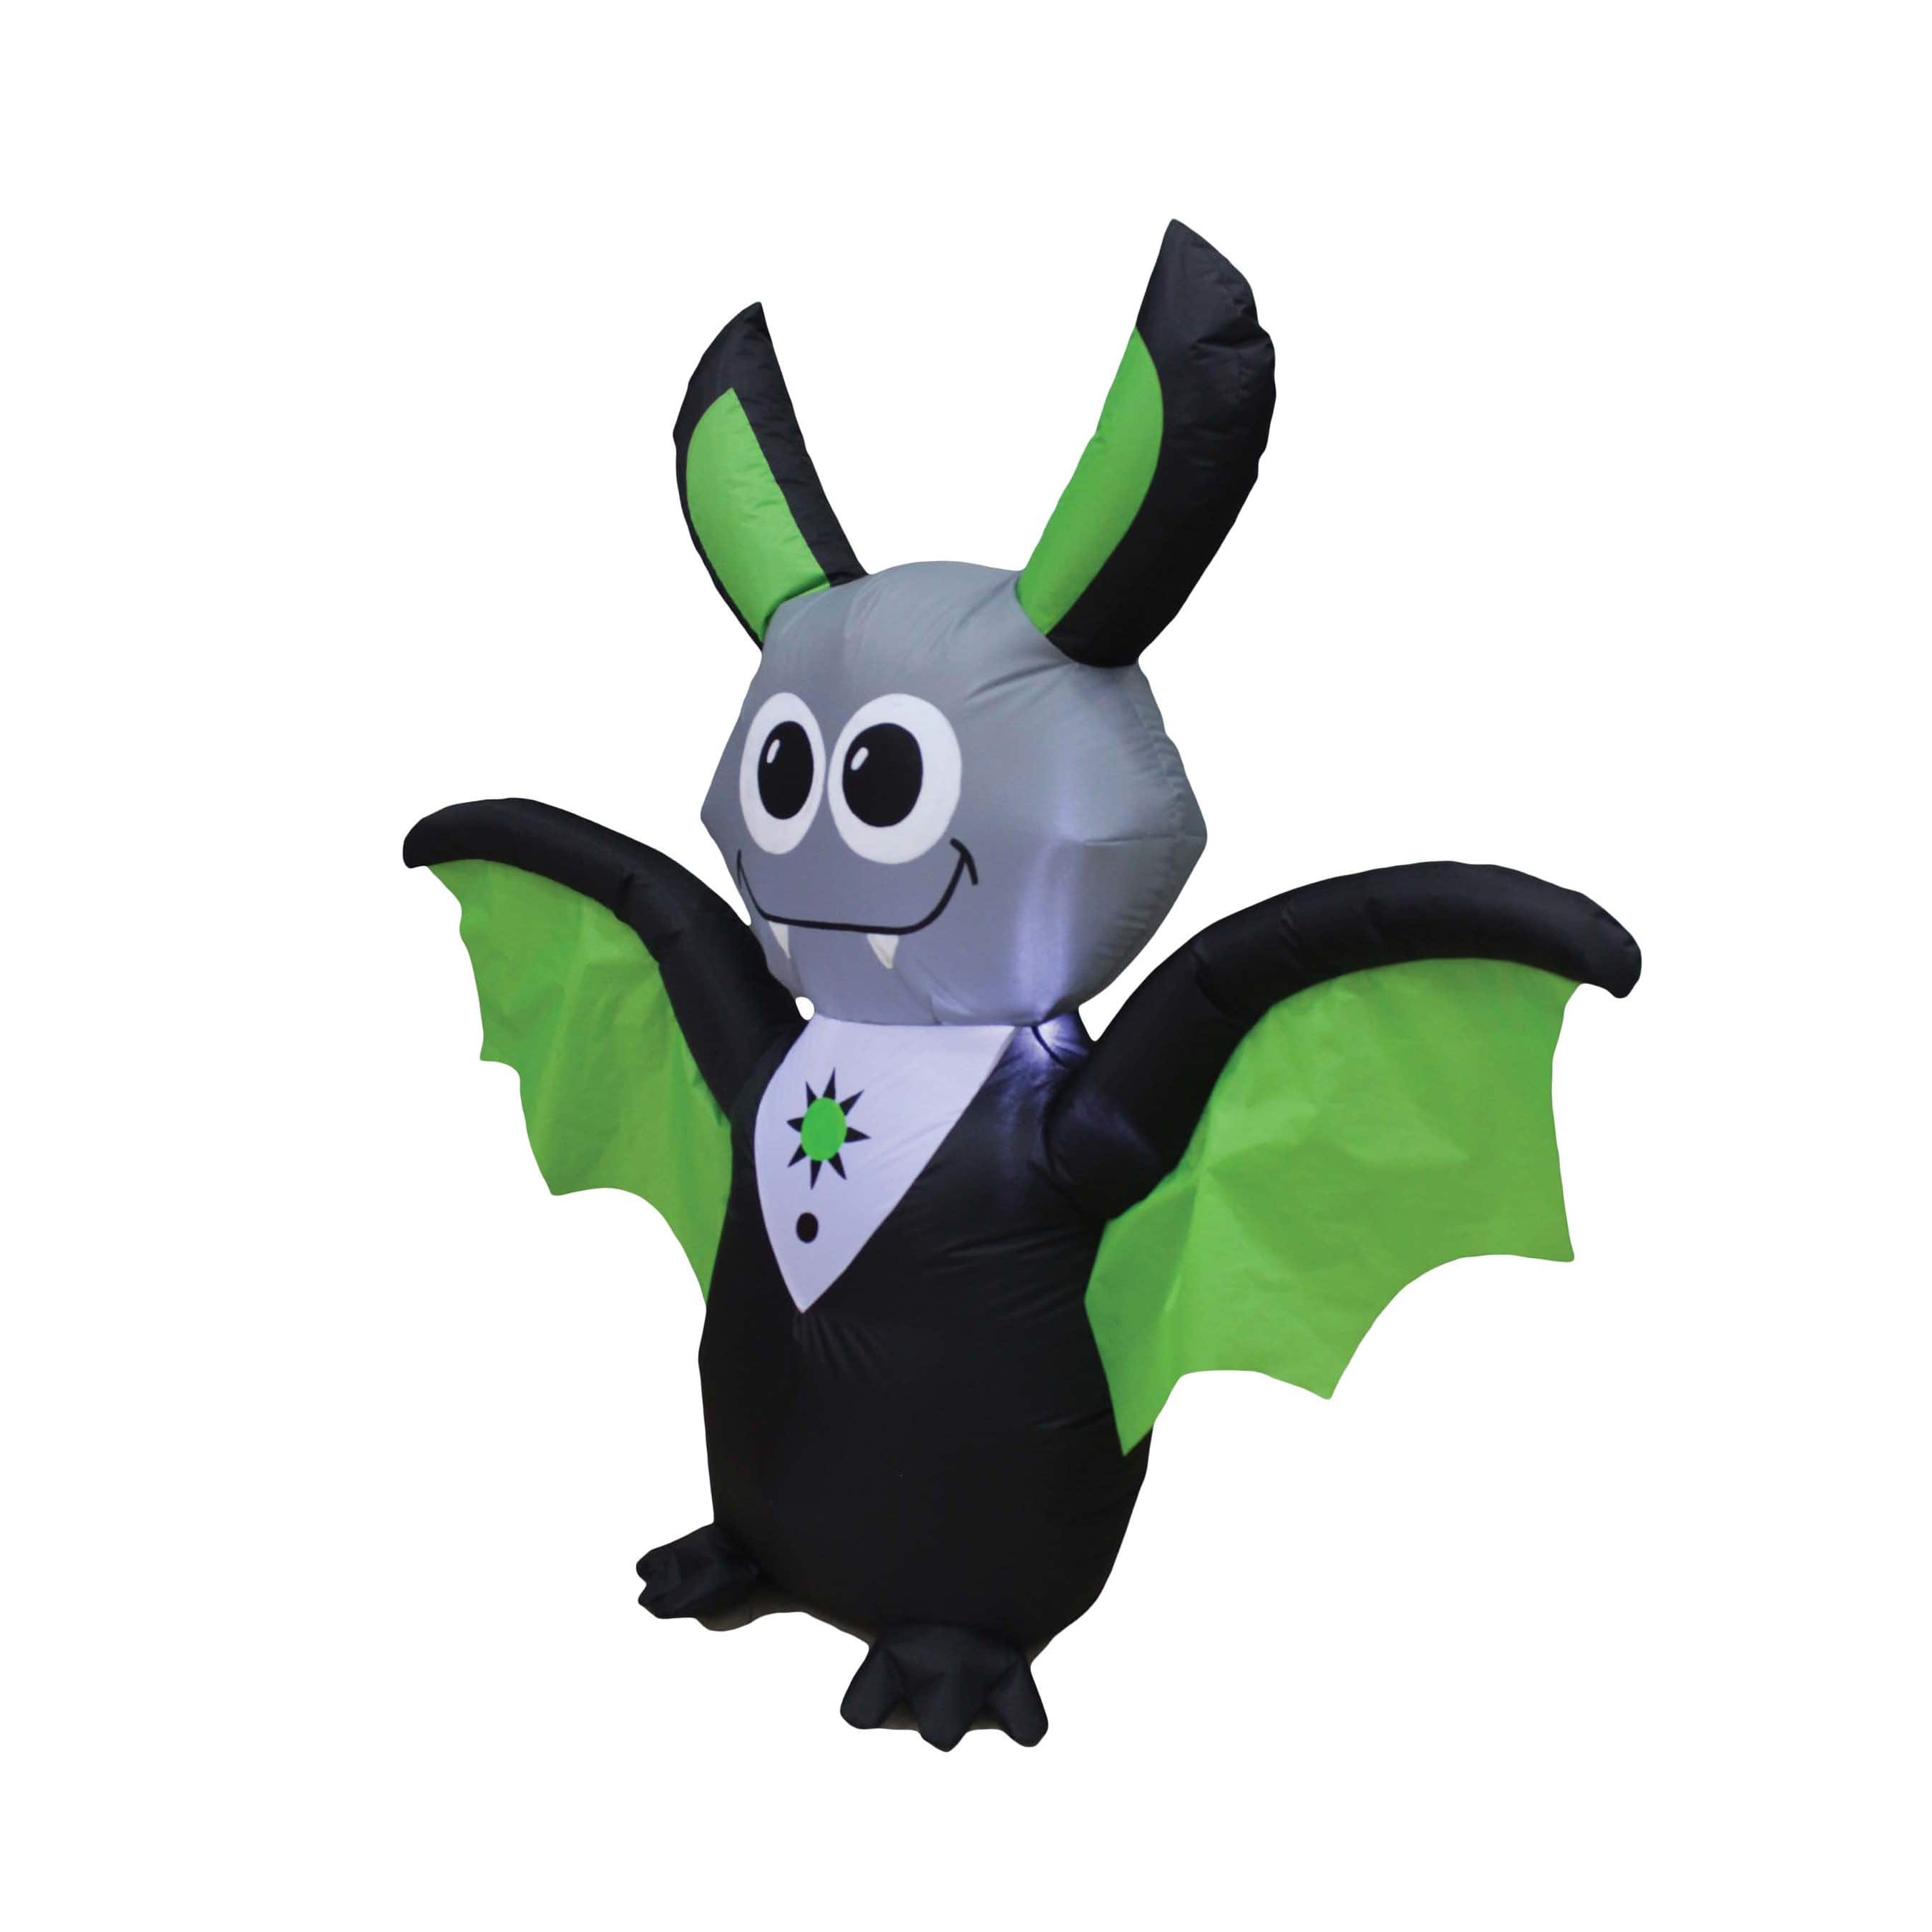 4ft. Inflatable Bat